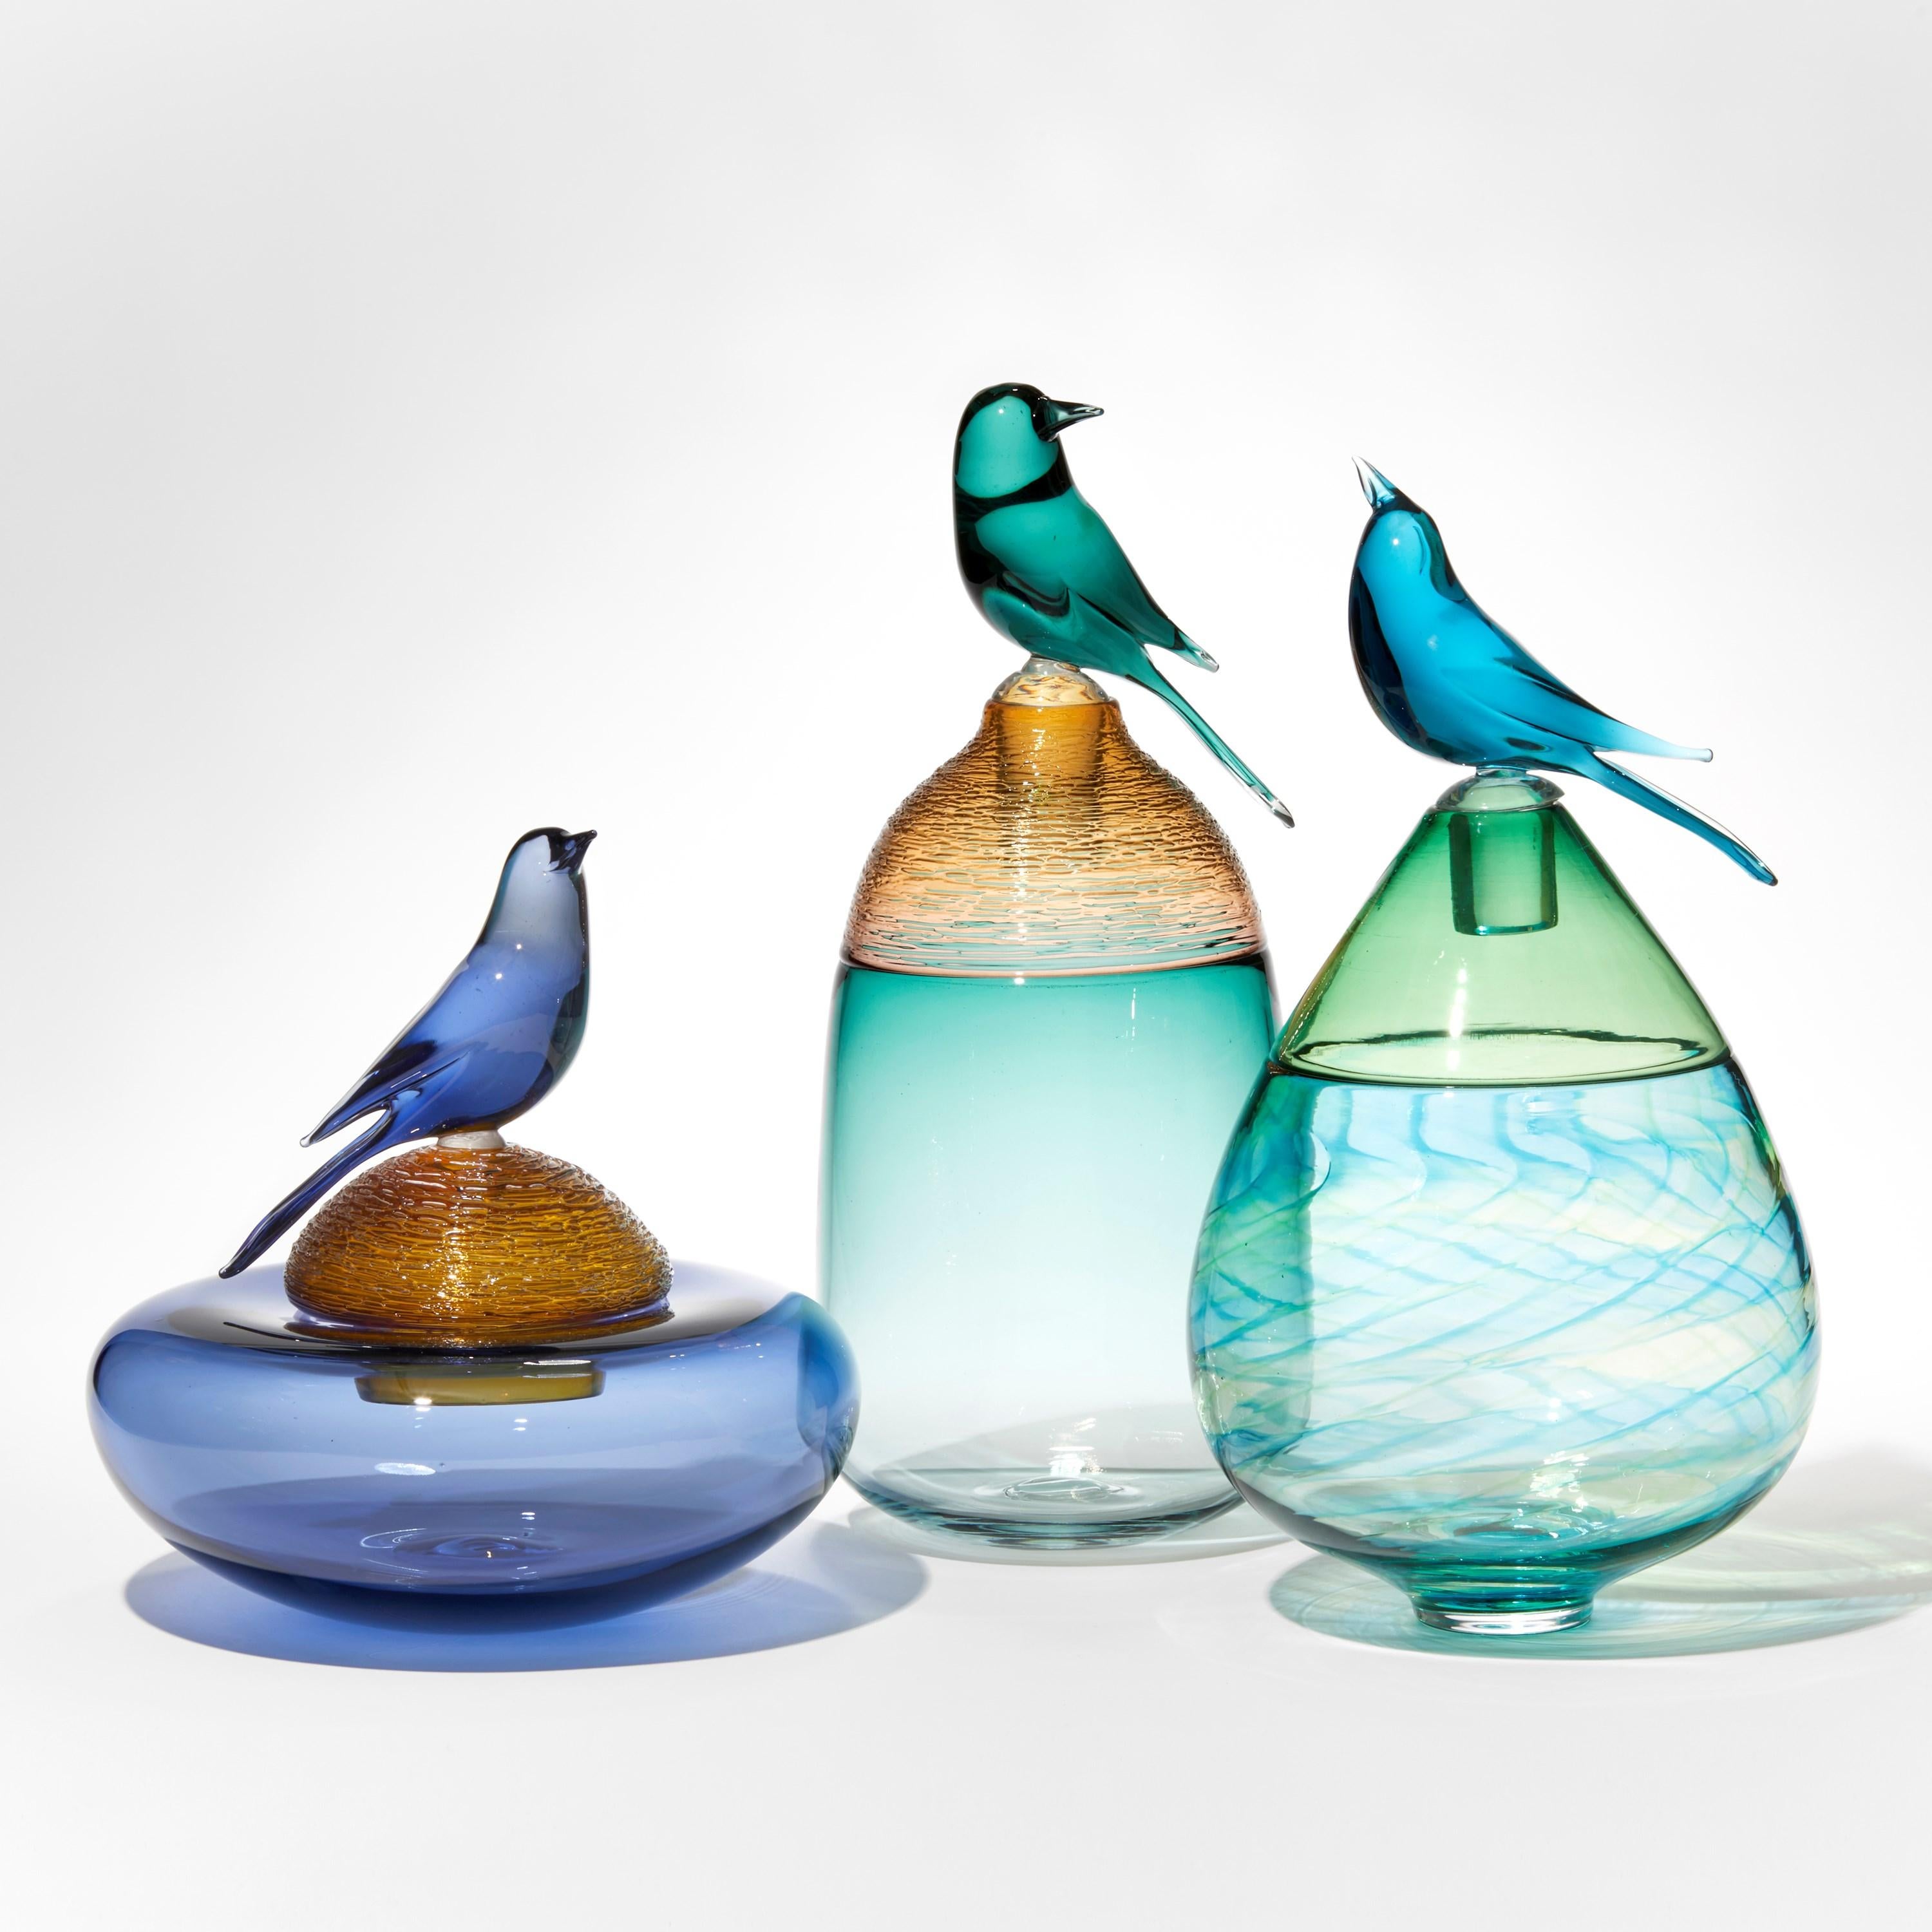 Hand-Crafted All About Birds XVII, a rich blue & amber glass bird sculpture by Julie Johnson